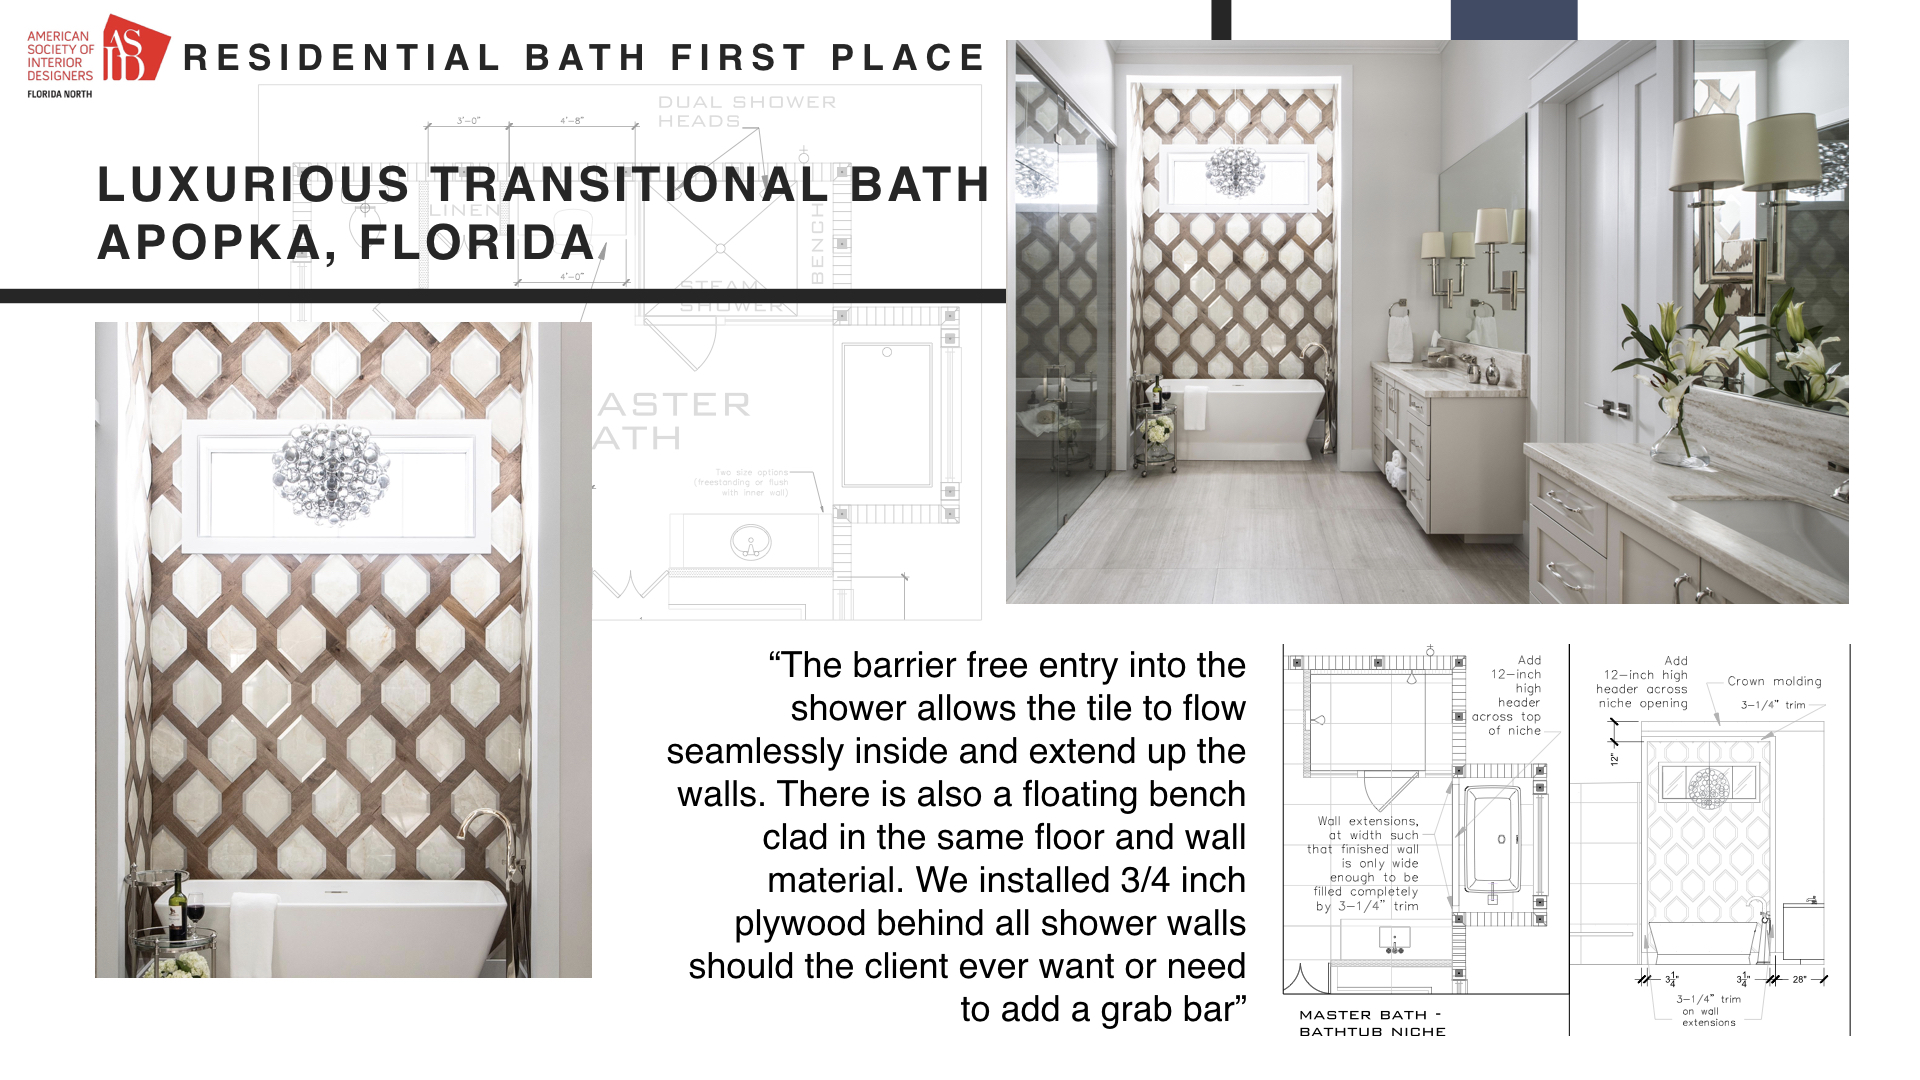 Luxurious Transitional Bath